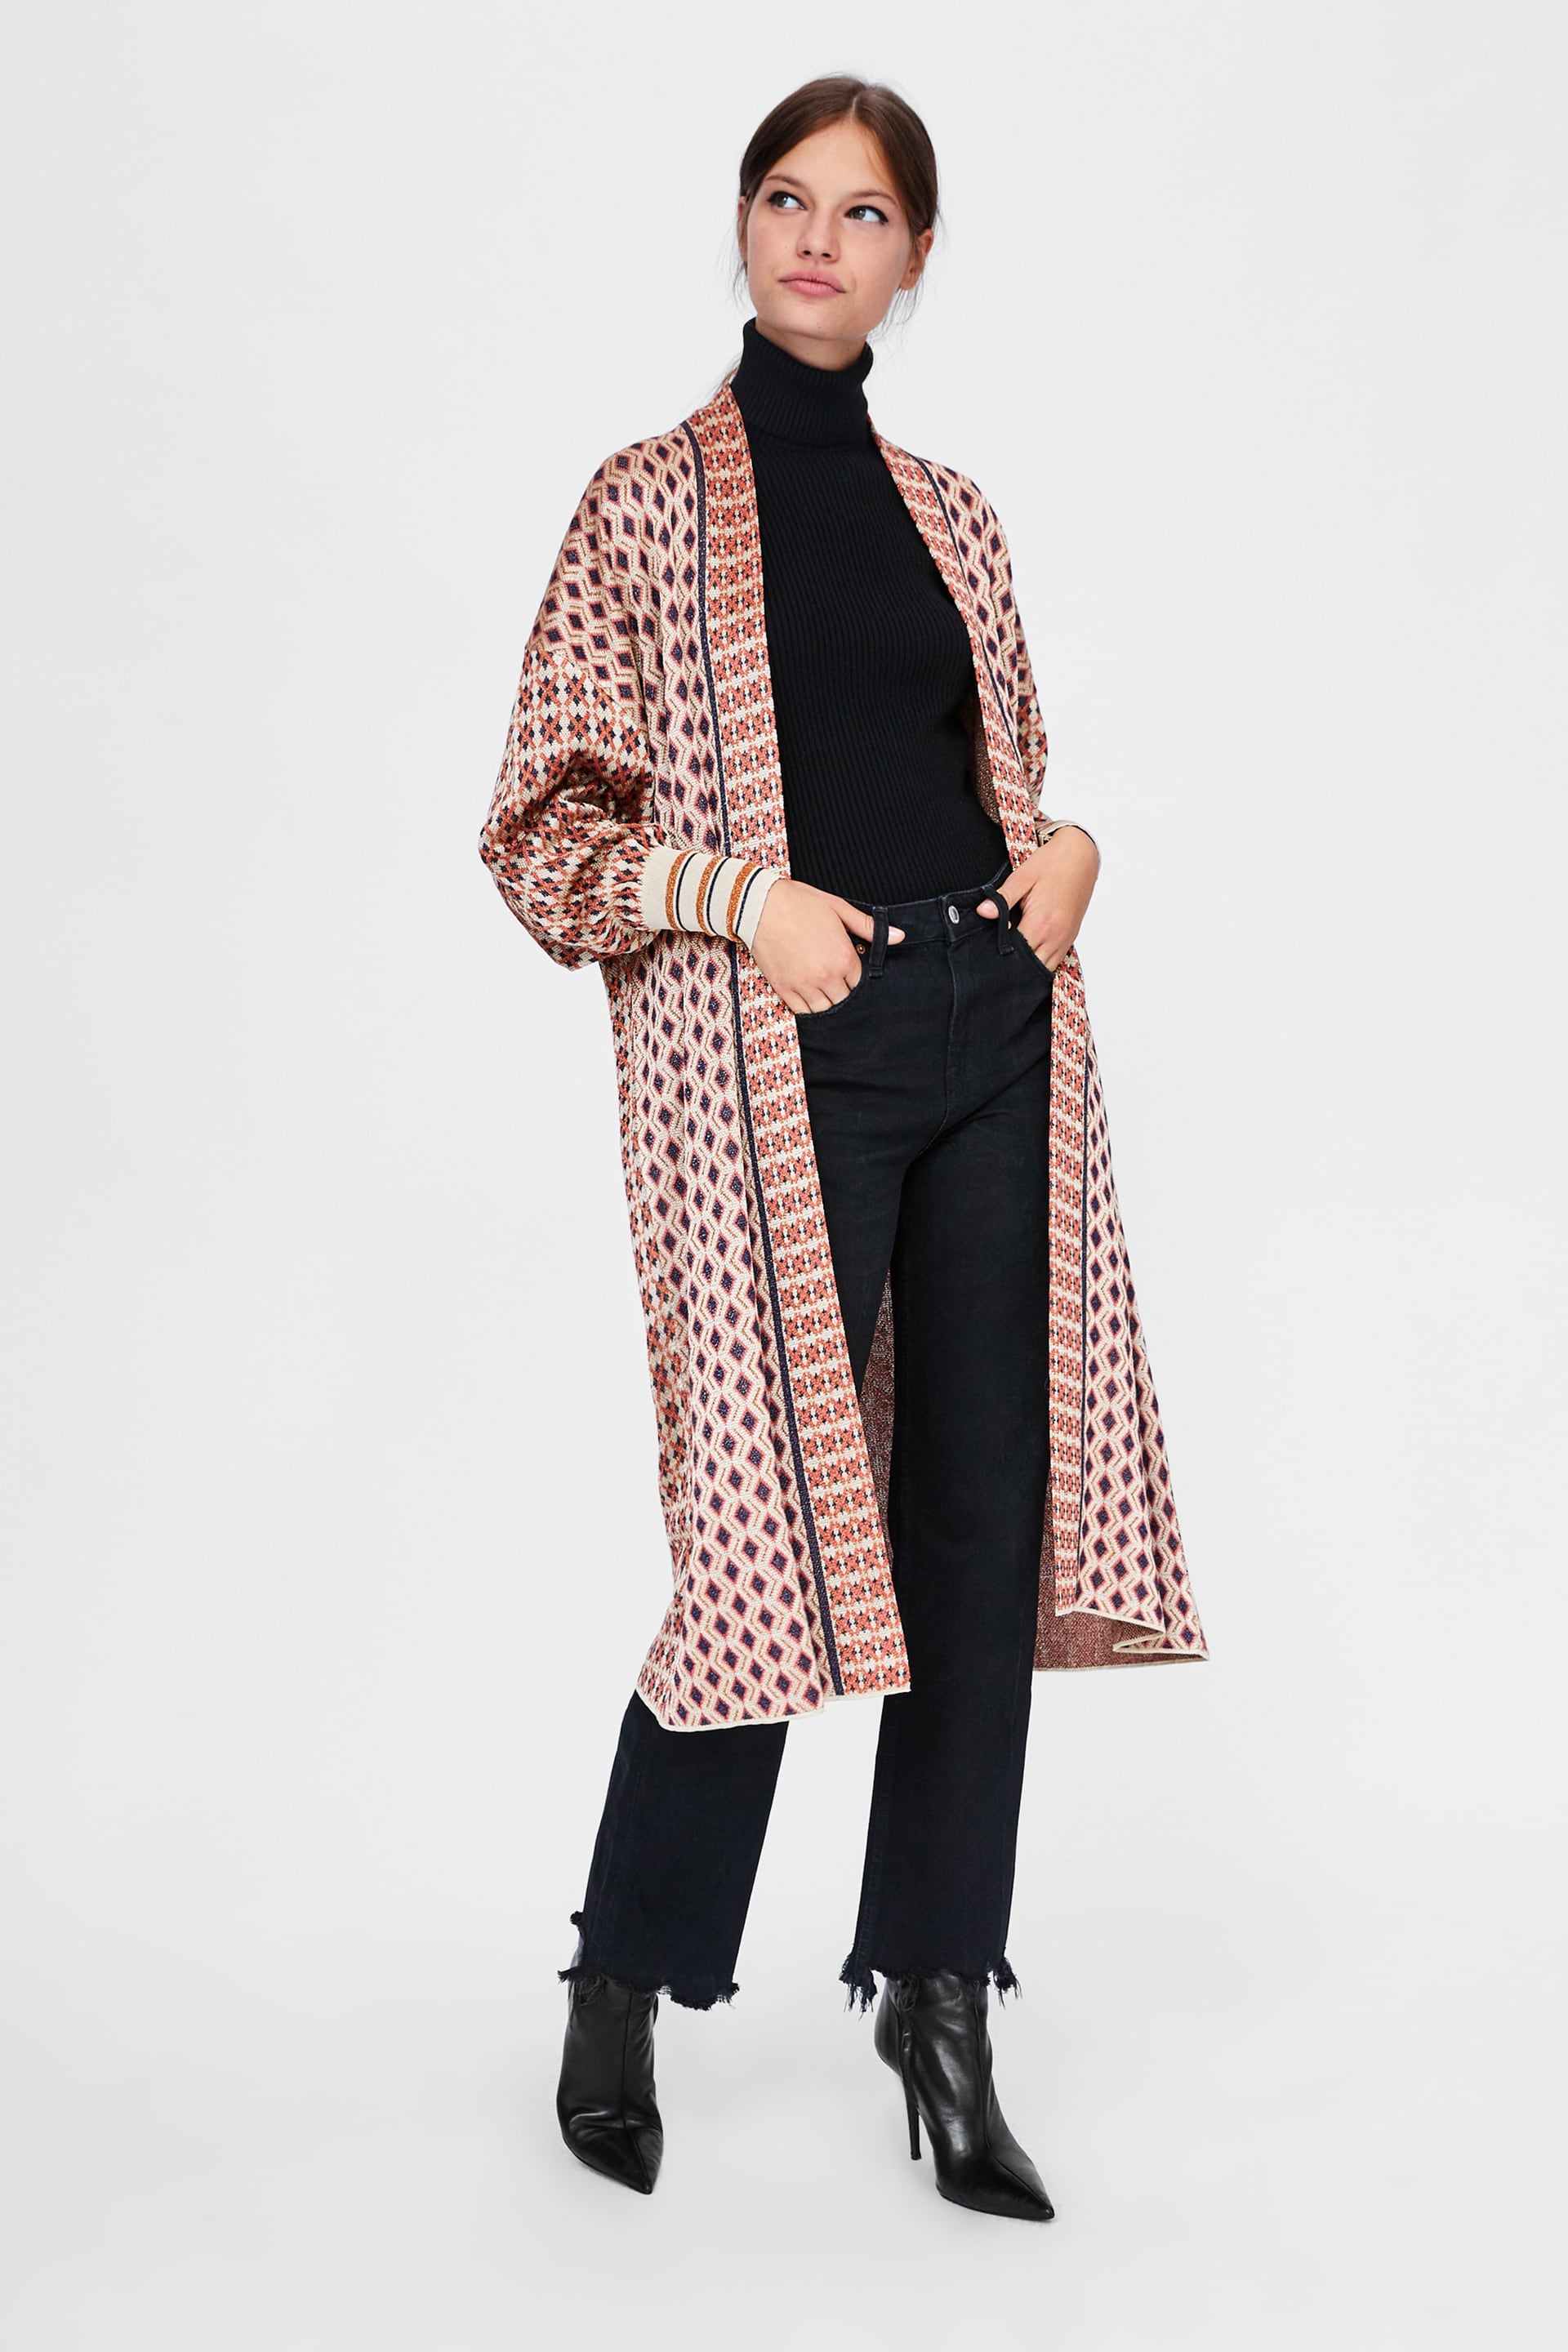 Zara Jacquard Coat | 16 Long Coats That 